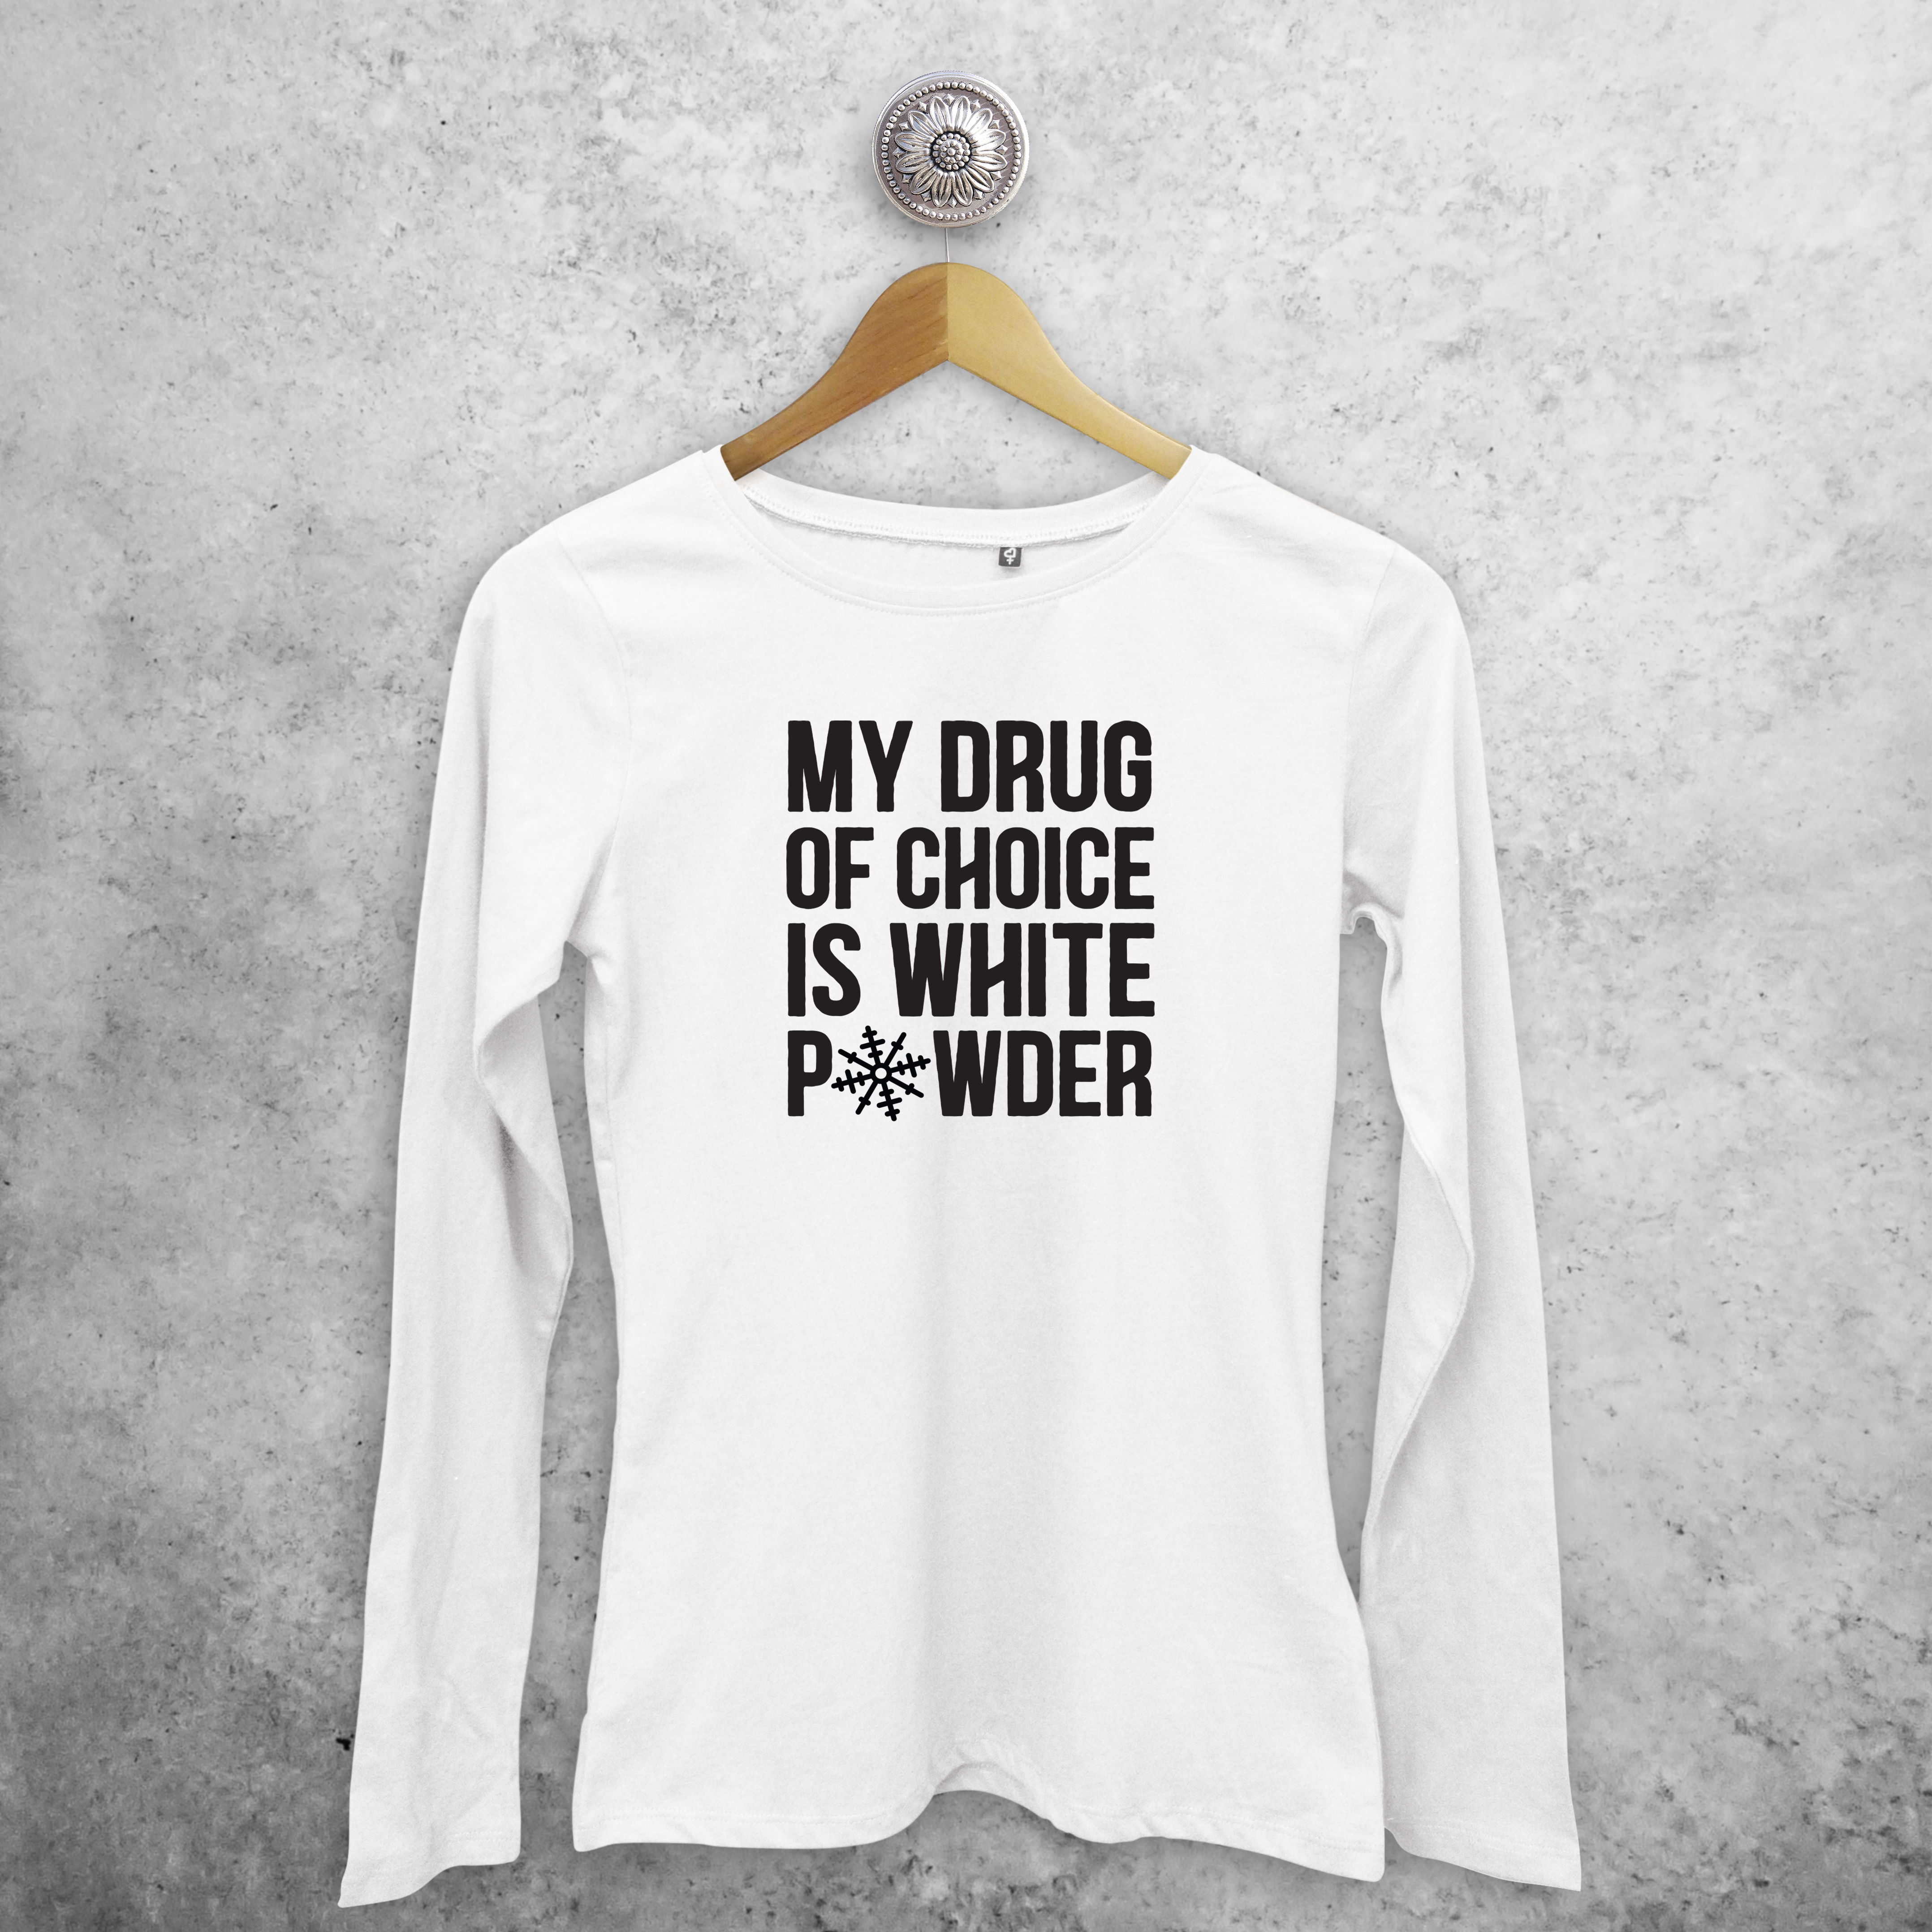 'My drug of choice is white powder' adult longsleeve shirt